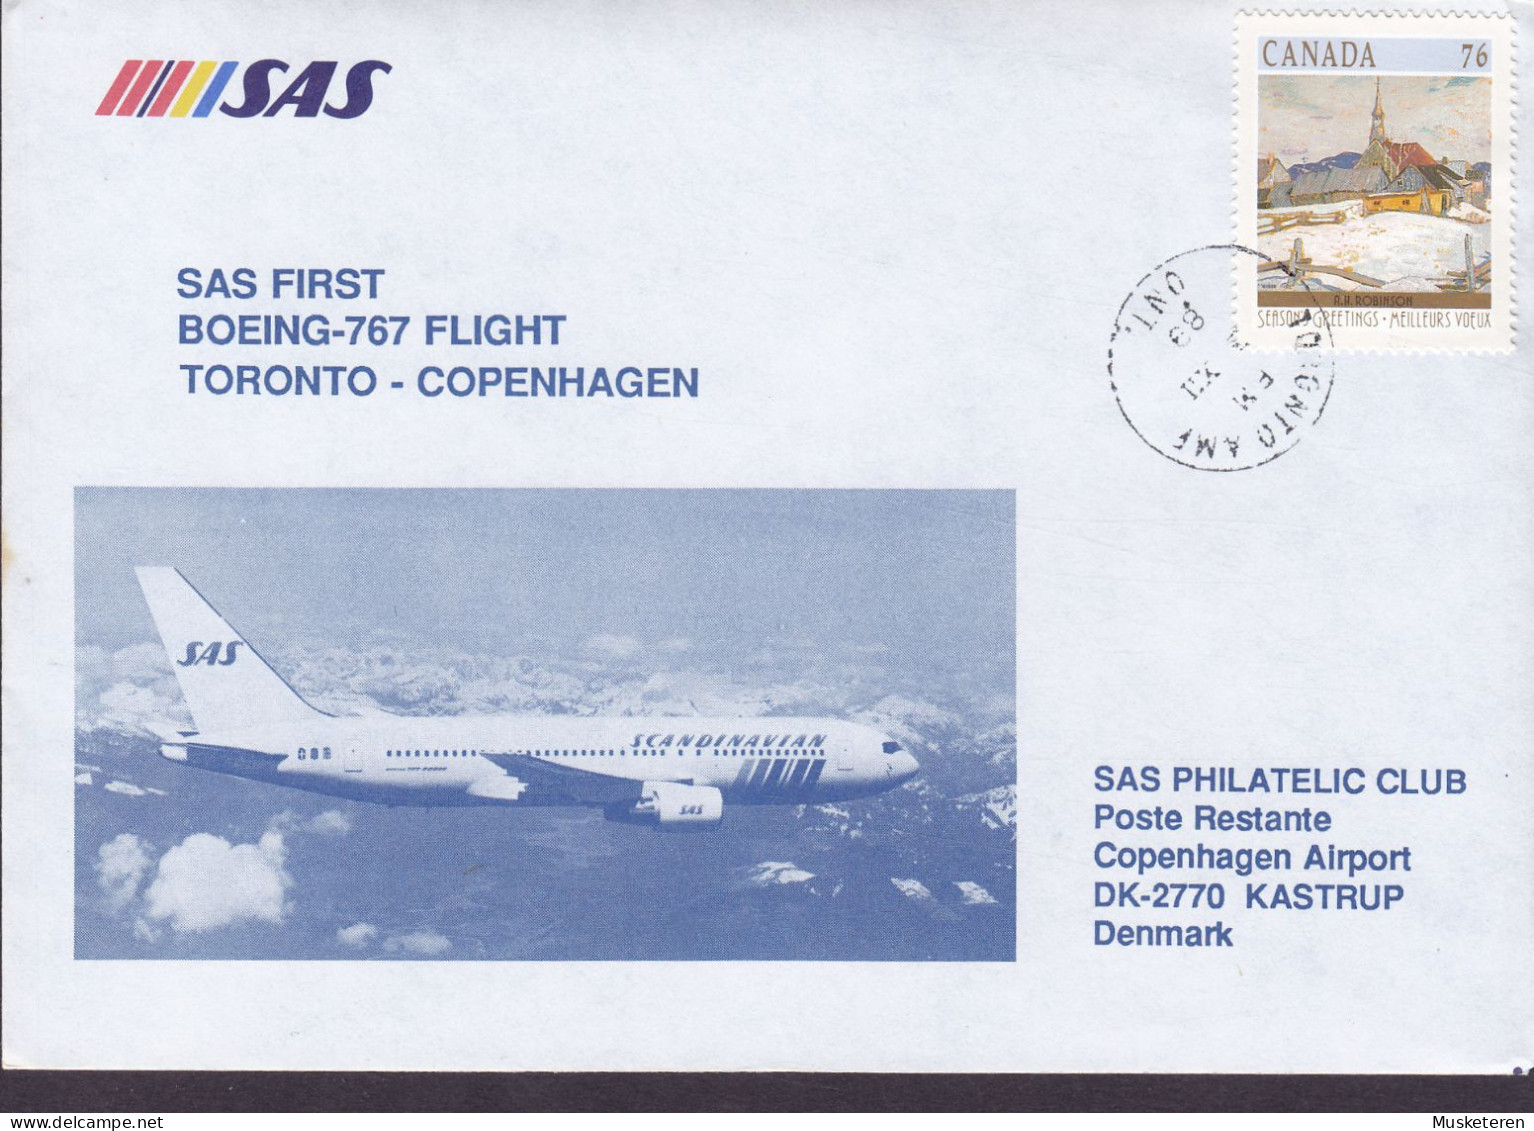 Canada First SAS BOEING-767 Flight TORONTO-COPENHAGEN 1989 Cover Brief Lettre KØBENHAVN LUFTHAVN (Arr.) - Primi Voli